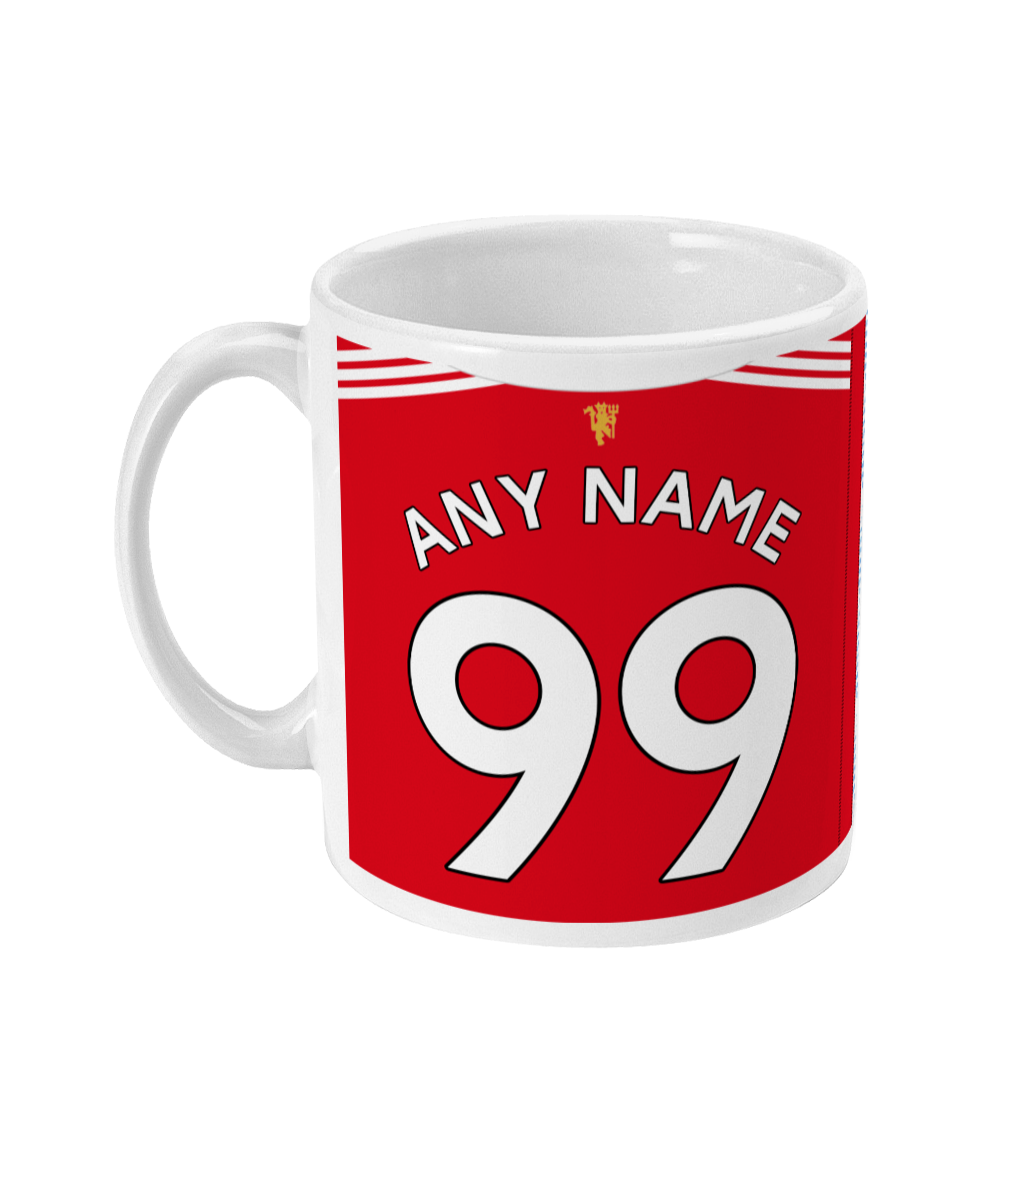 Man United - Personalised 2021/22 Home/Away Mug